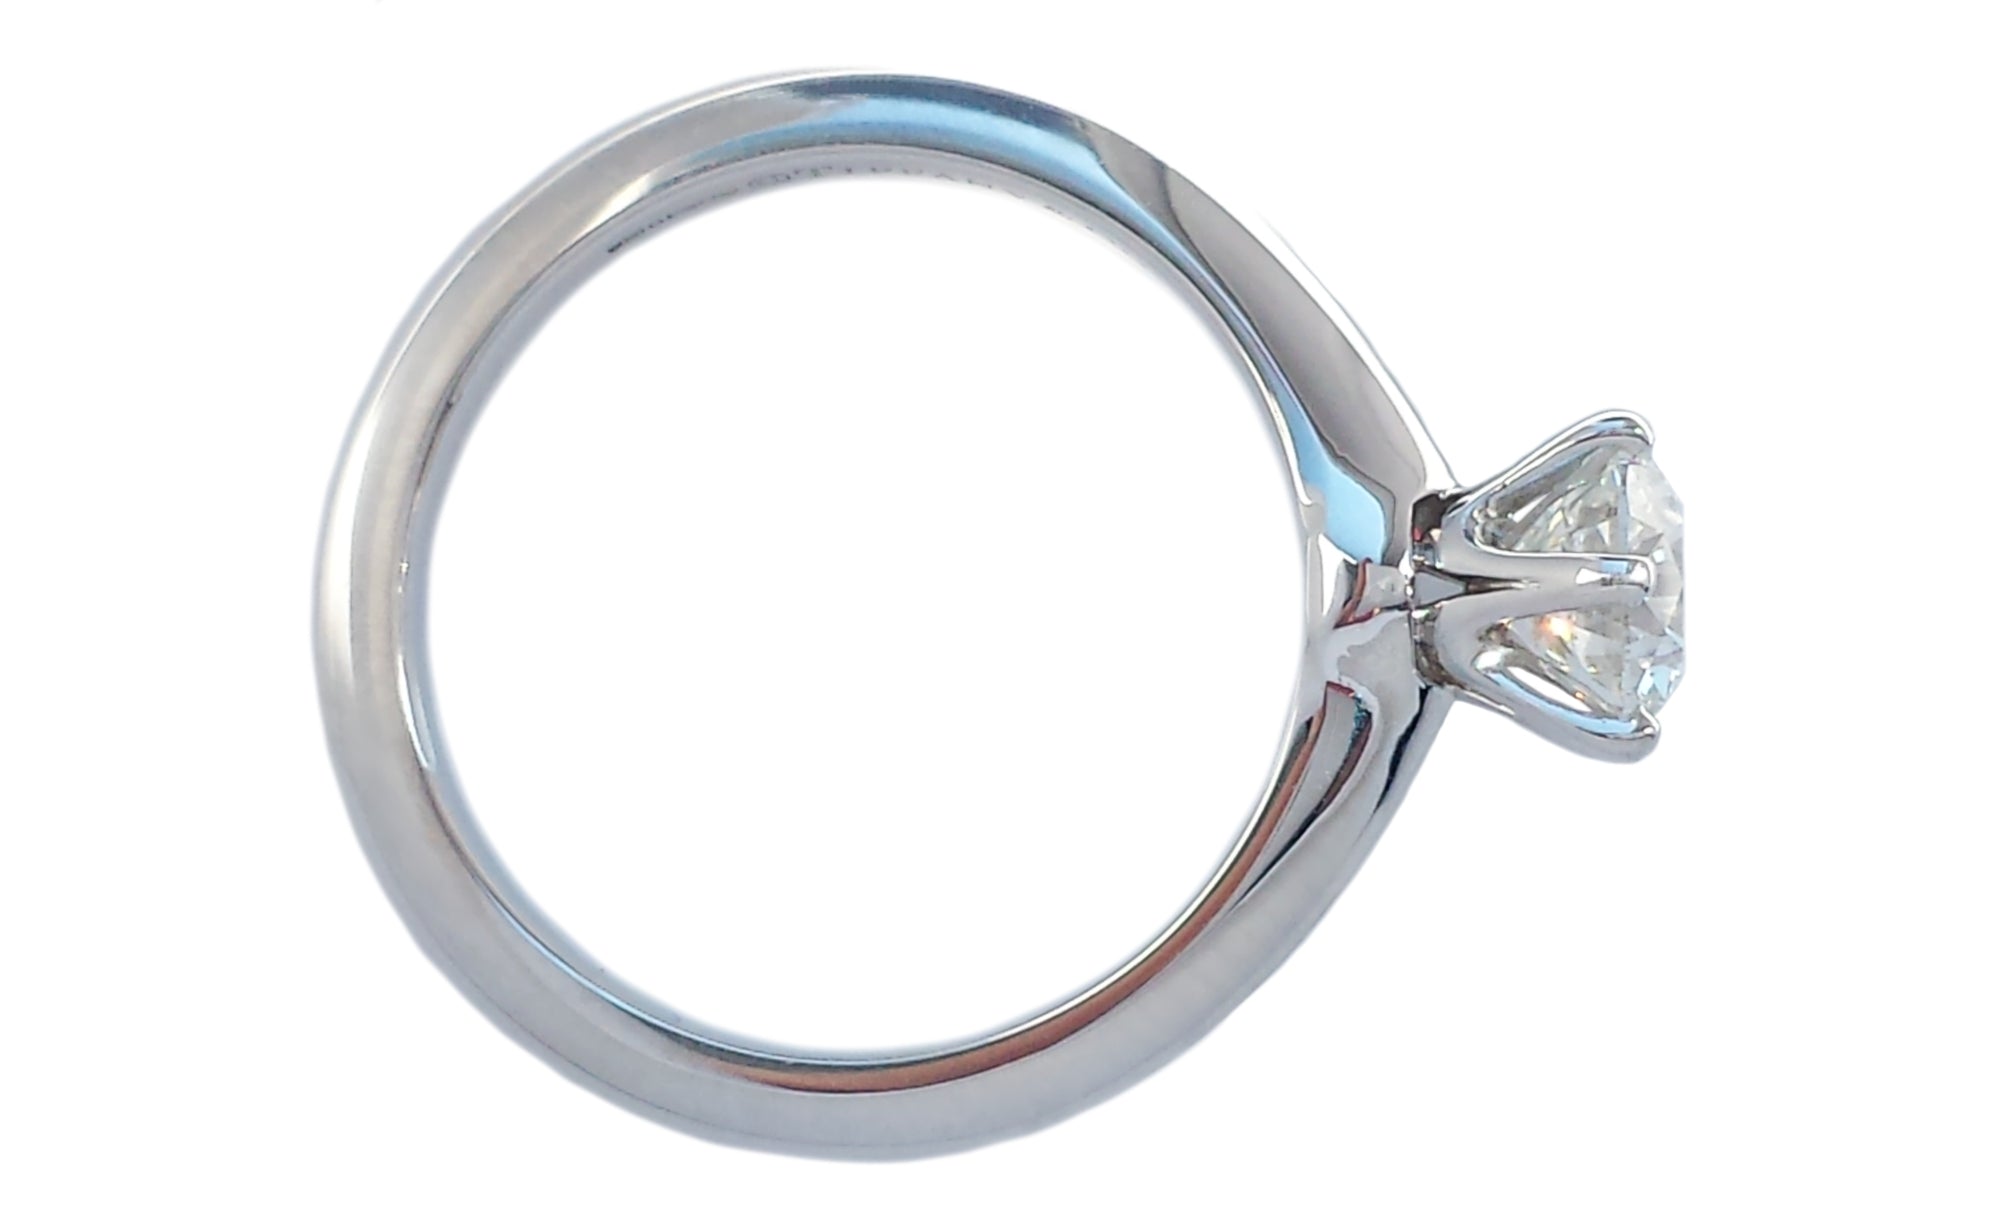 Tiffany & Co. 0.83ct G/VVS1 Round Brilliant Diamond Engagement Ring